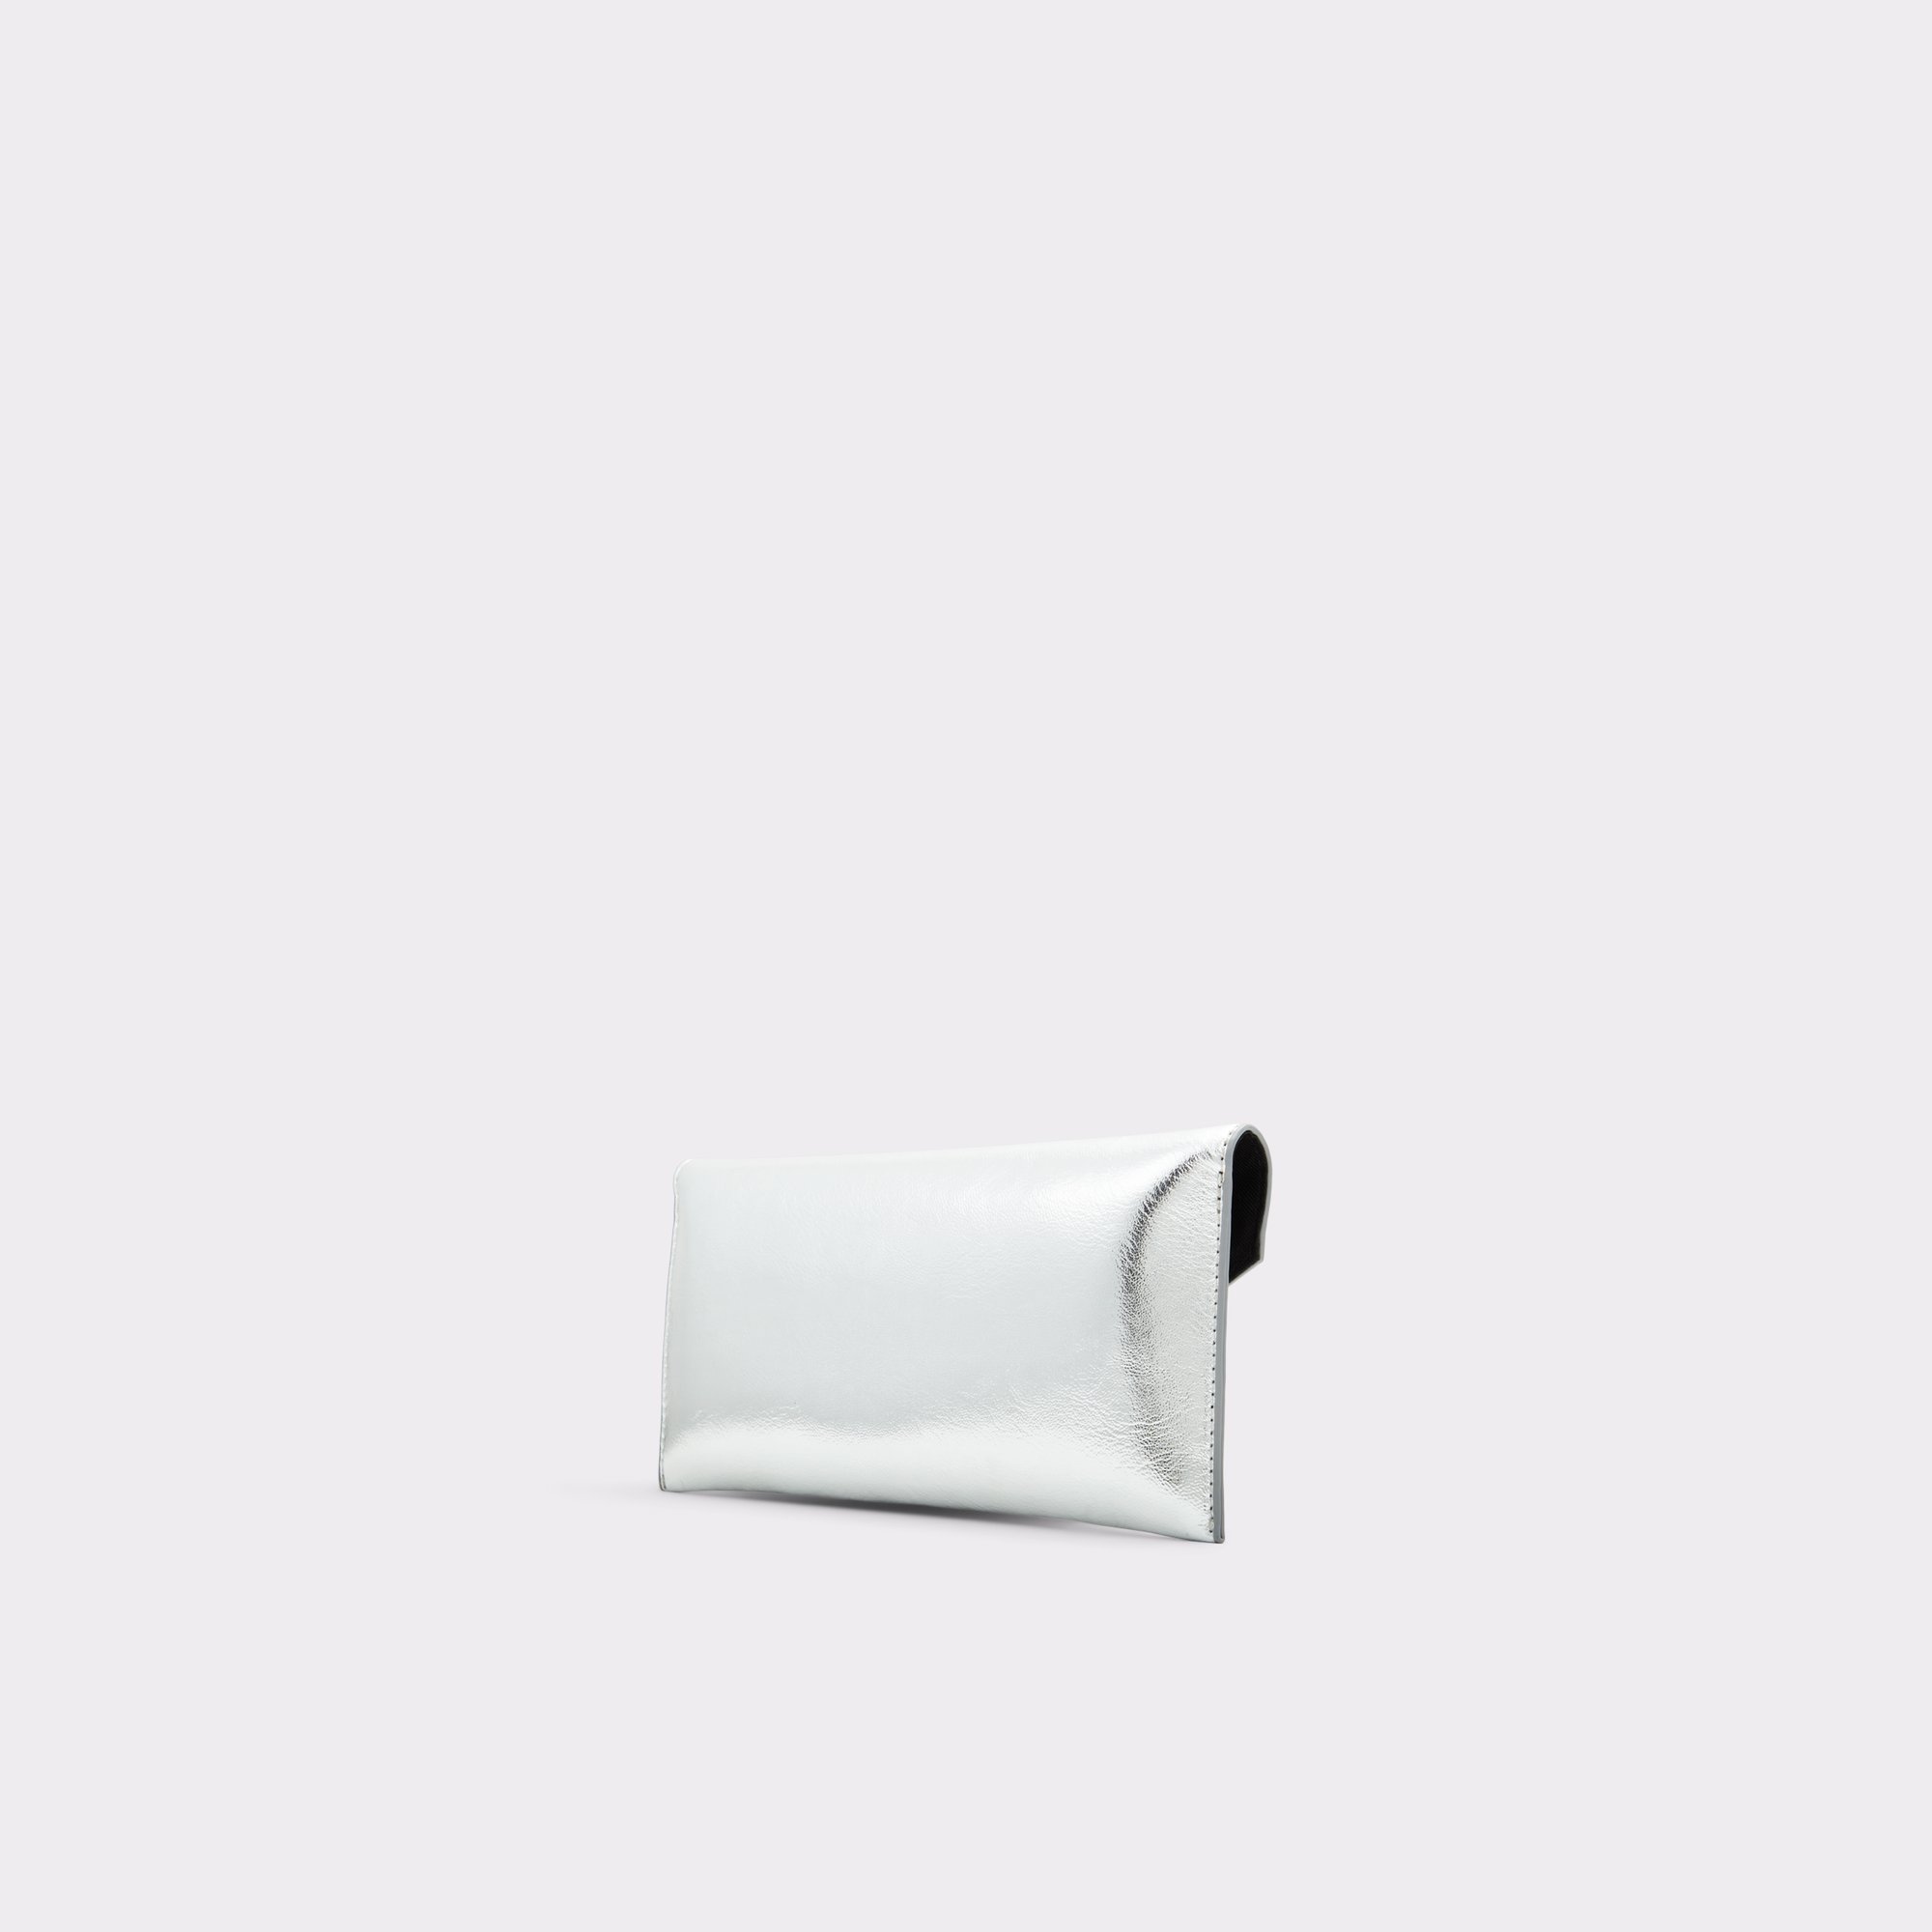 Mallasvex Silver Synthetic Smooth Women's Clutches & Evening bags | ALDO Canada